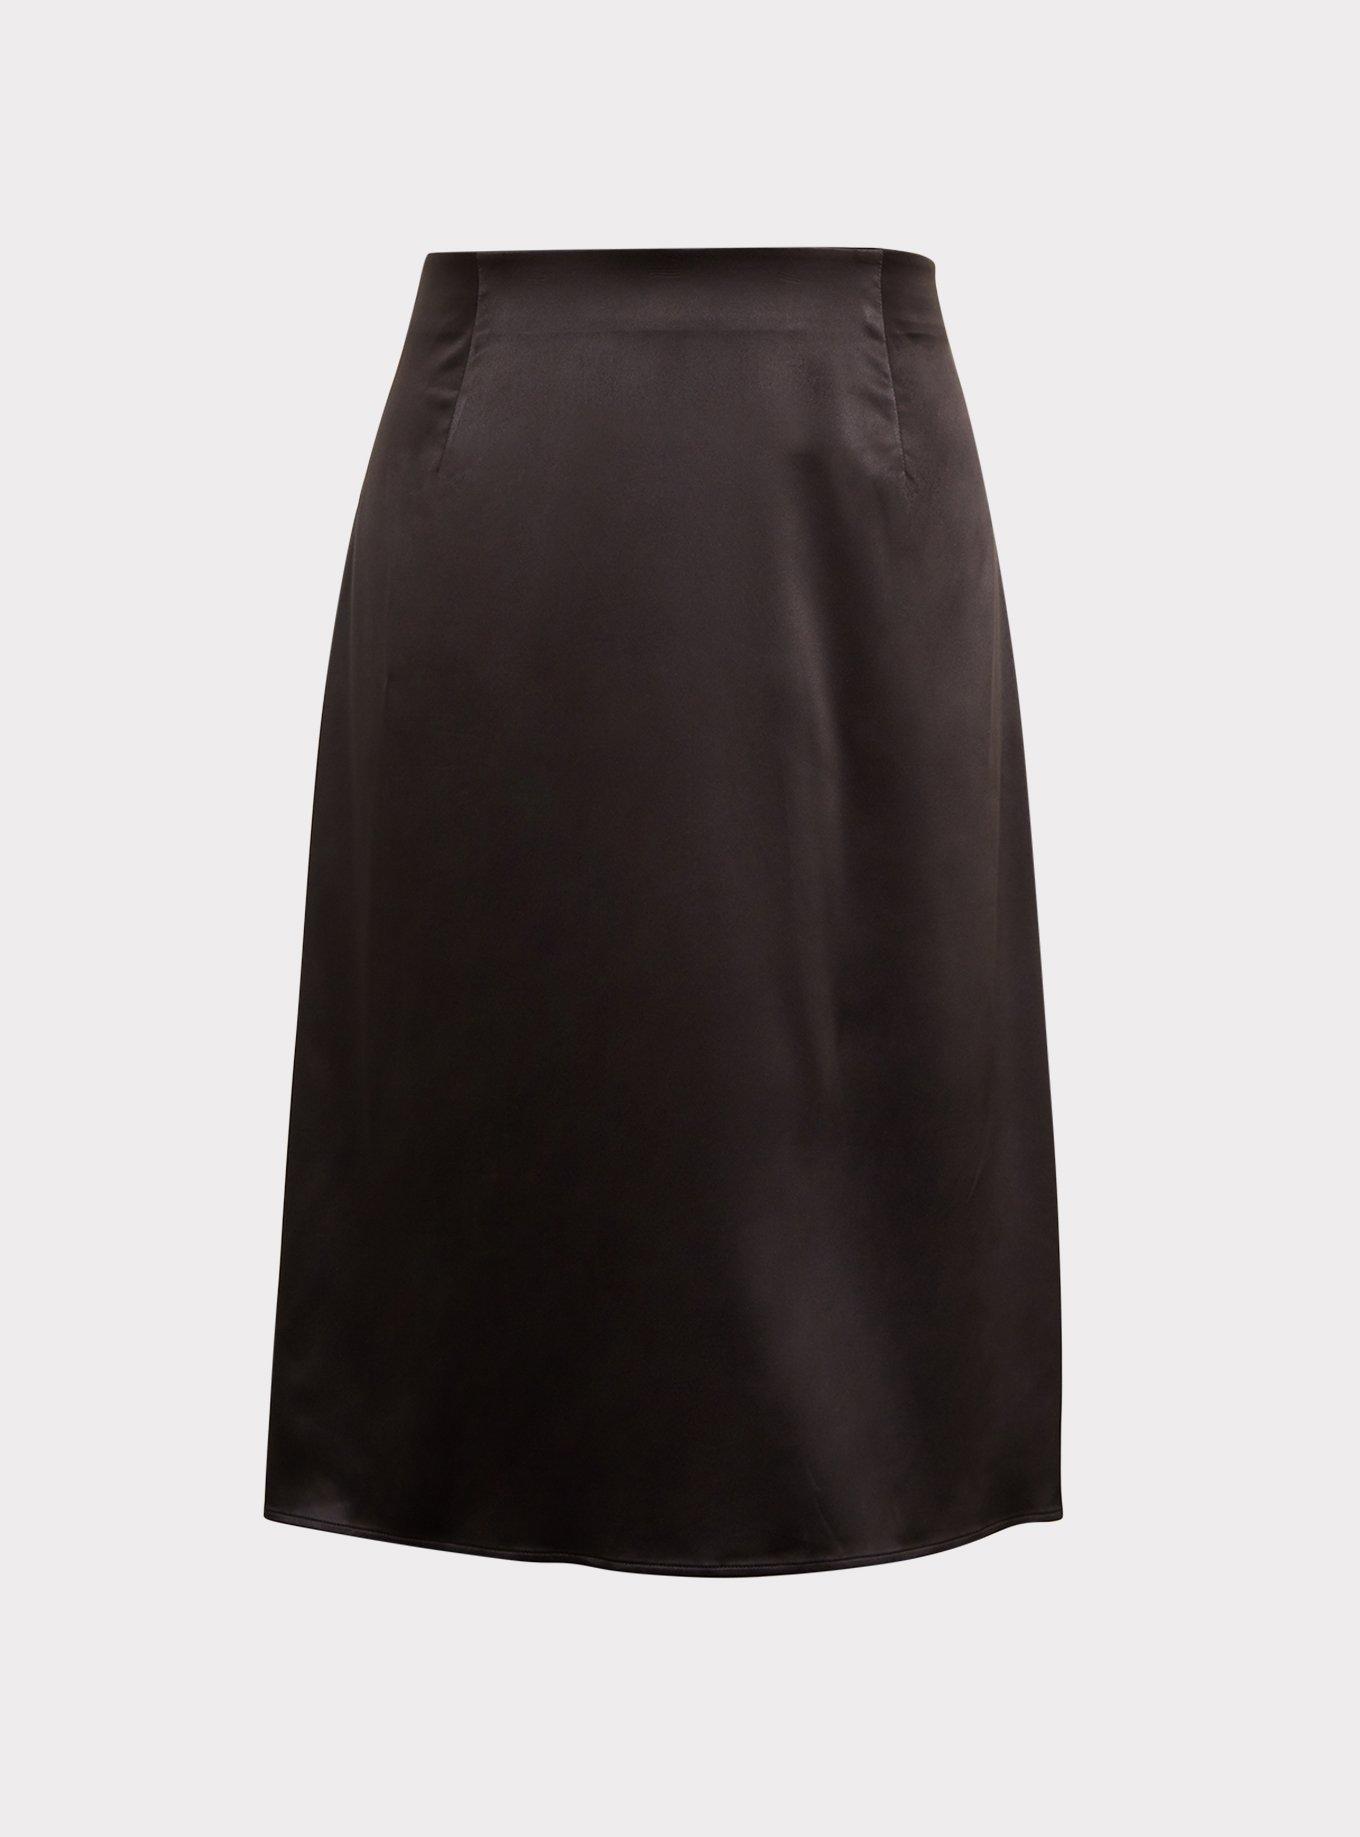 Torrid Slim Fix Pencil Skirt  Fitted pencil skirts, Pencil skirt, Gray  skirt